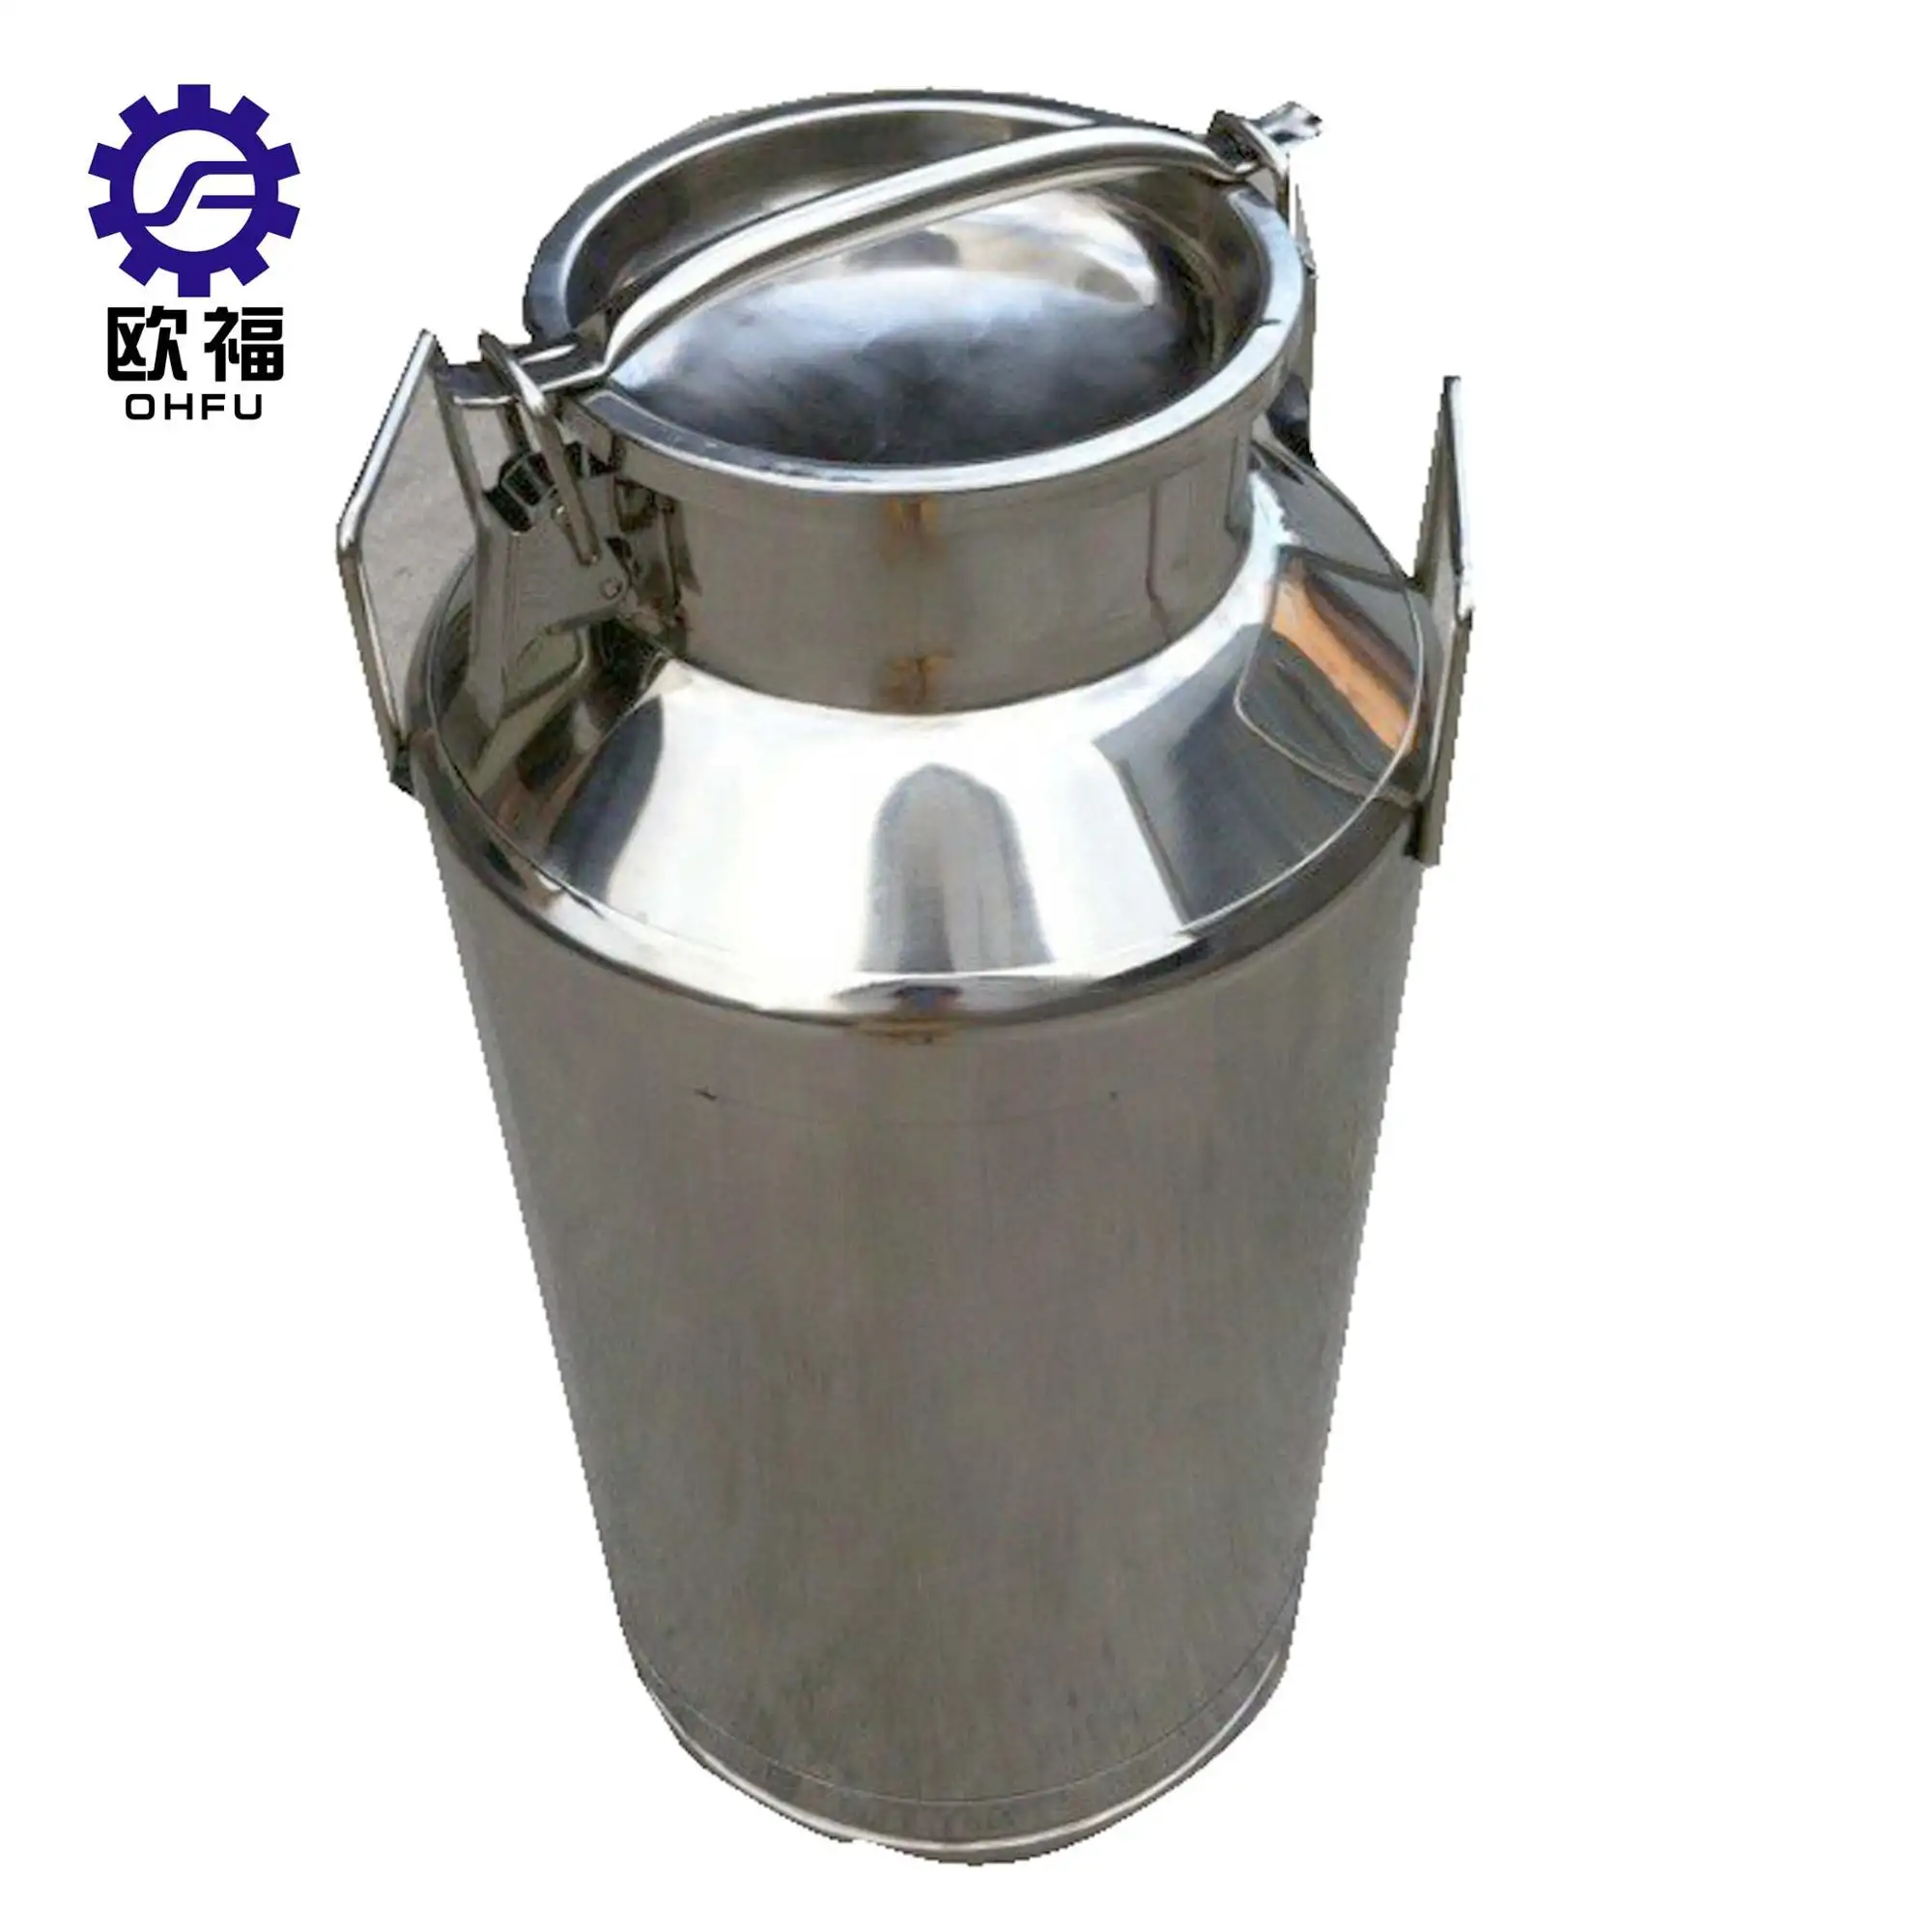 High quality 30L/40L/50L stainless steel milk can boiler/ raw milk storage tank